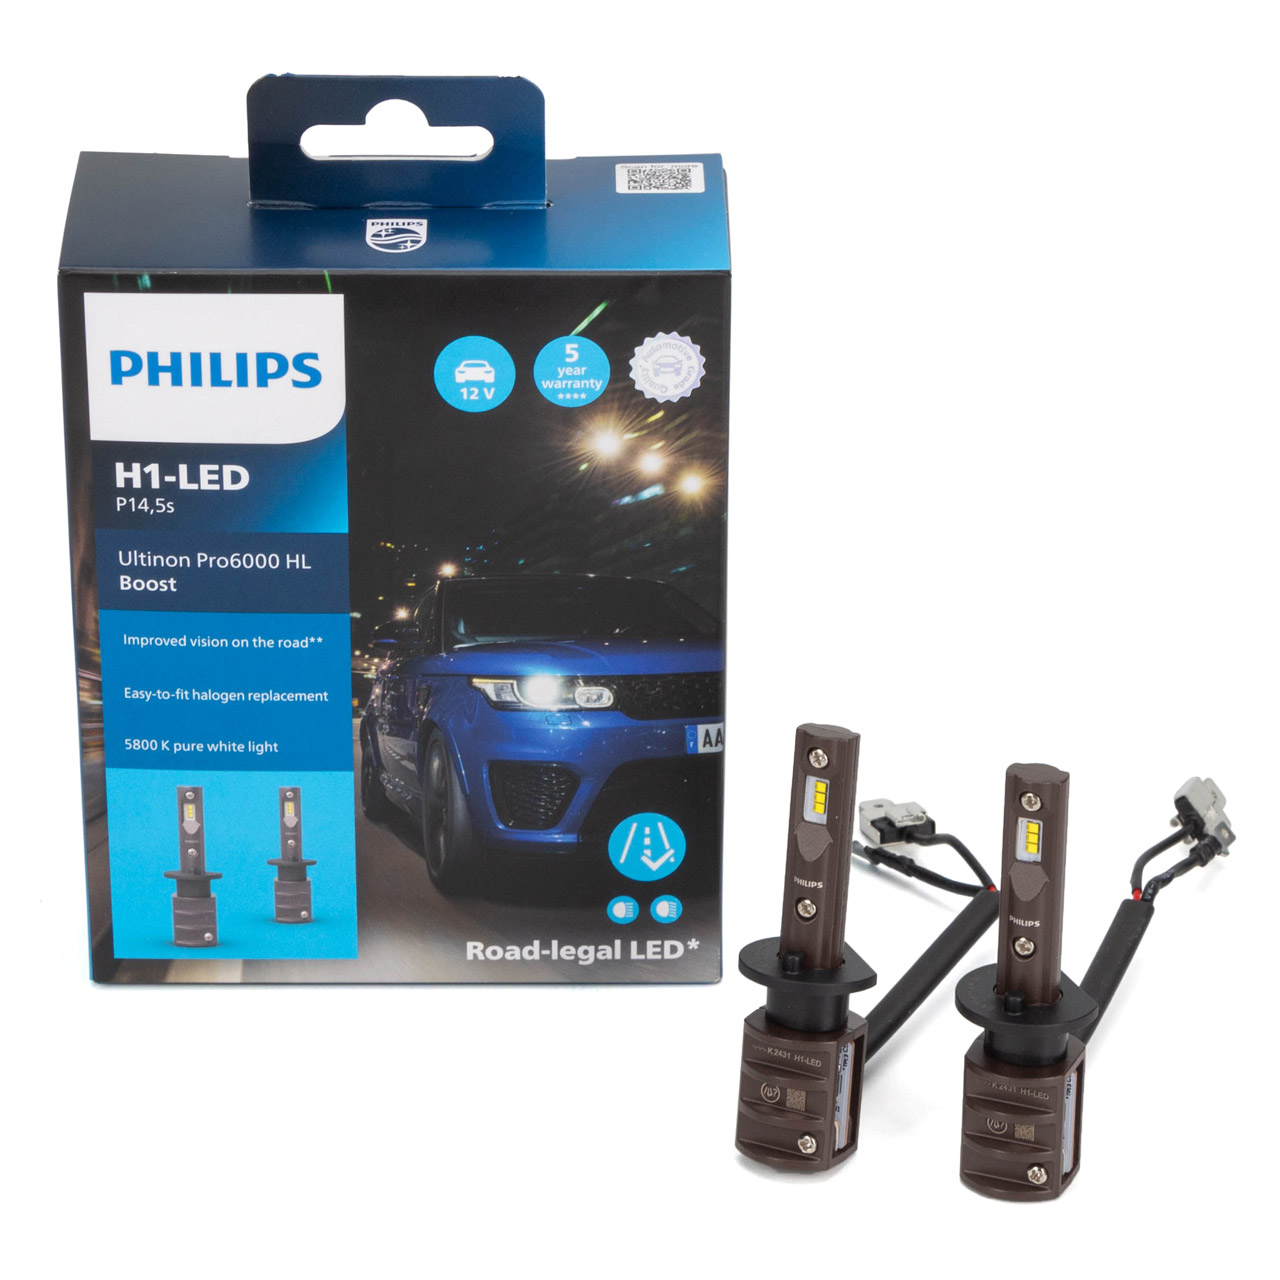 2x PHILIPS Ultinon Pro6000 HL Boost H1 LED mit Straßenzulassung 12V 5.800K